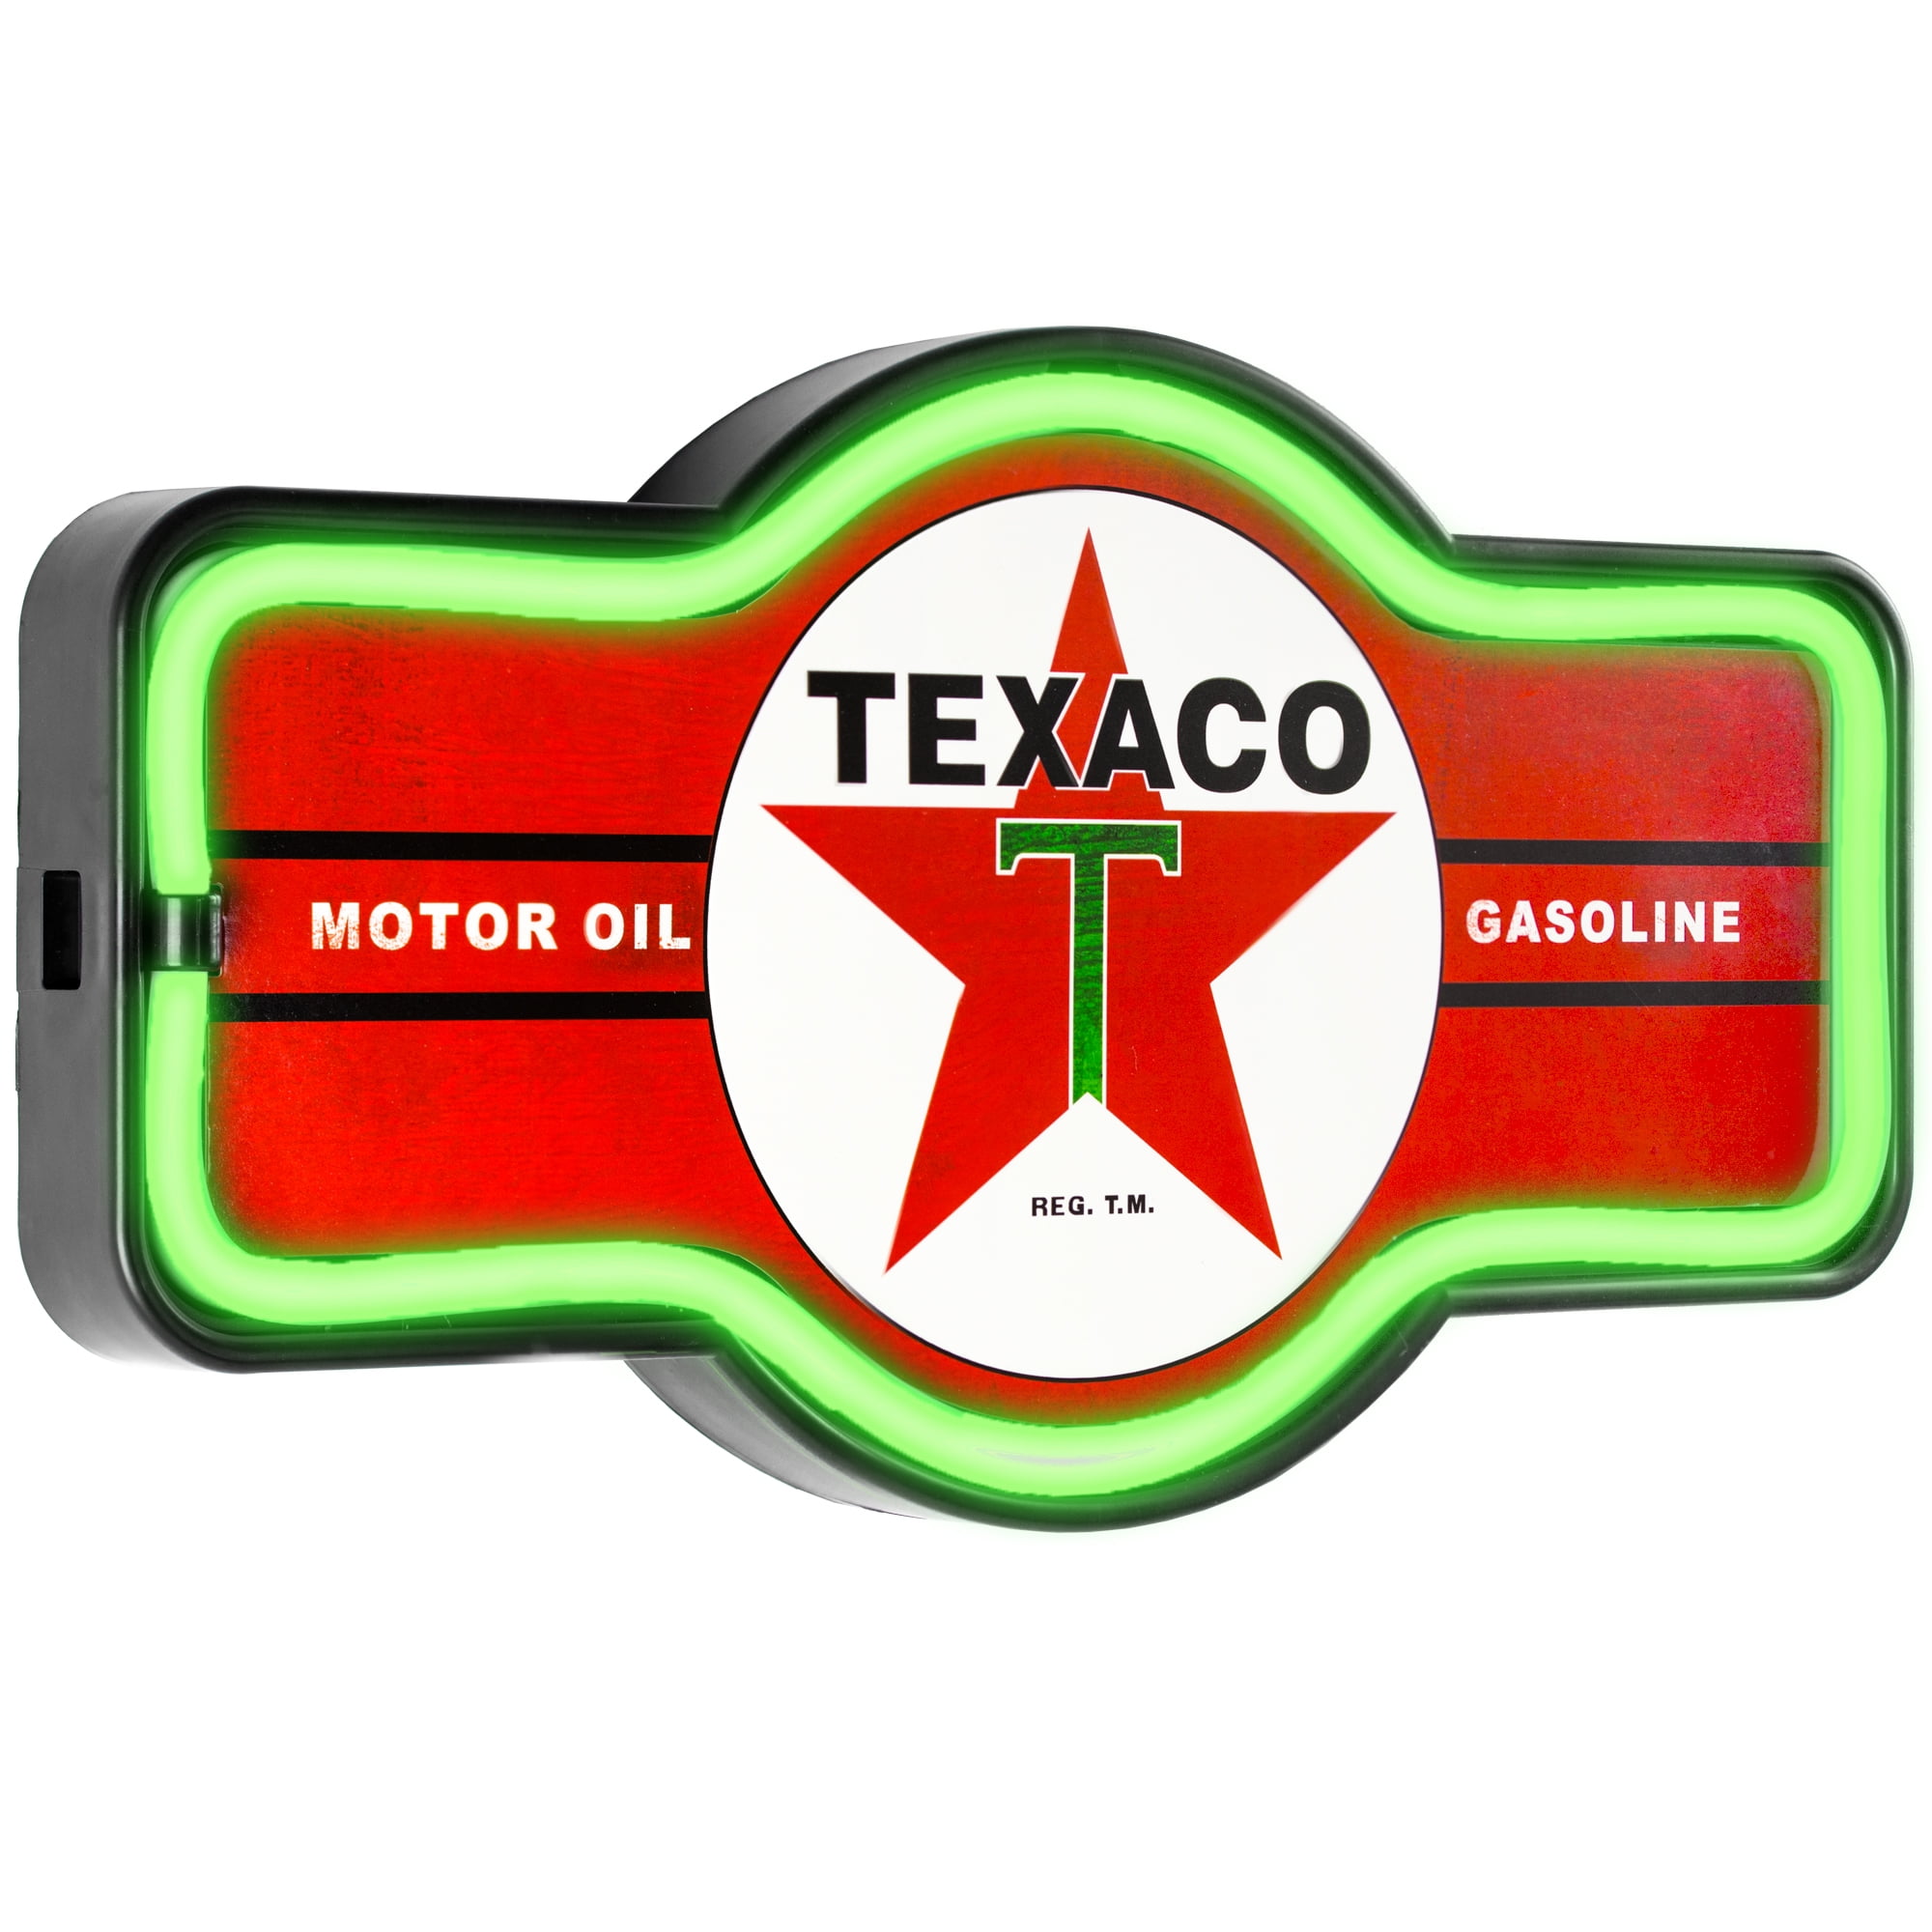 Dollhouse Miniature Texaco Motor Oil Company Sign Vintage Look 